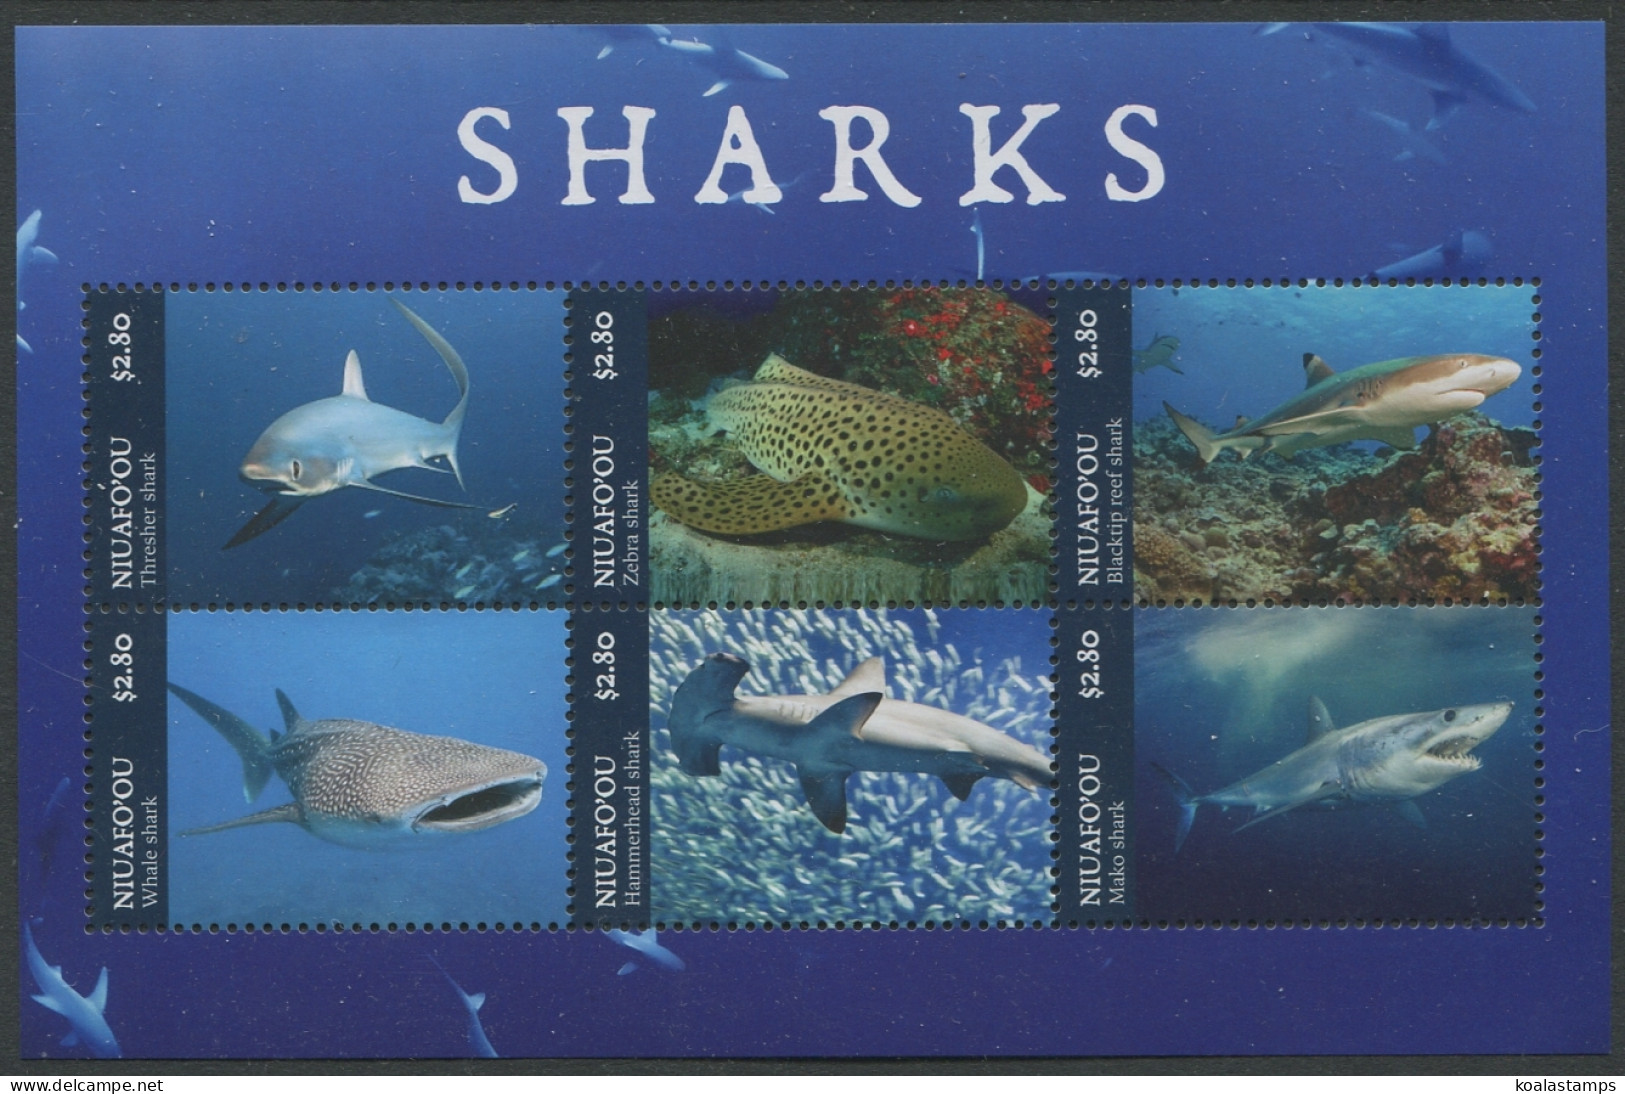 Niuafo'ou 2019 SG486 Sharks MS MNH - Tonga (1970-...)